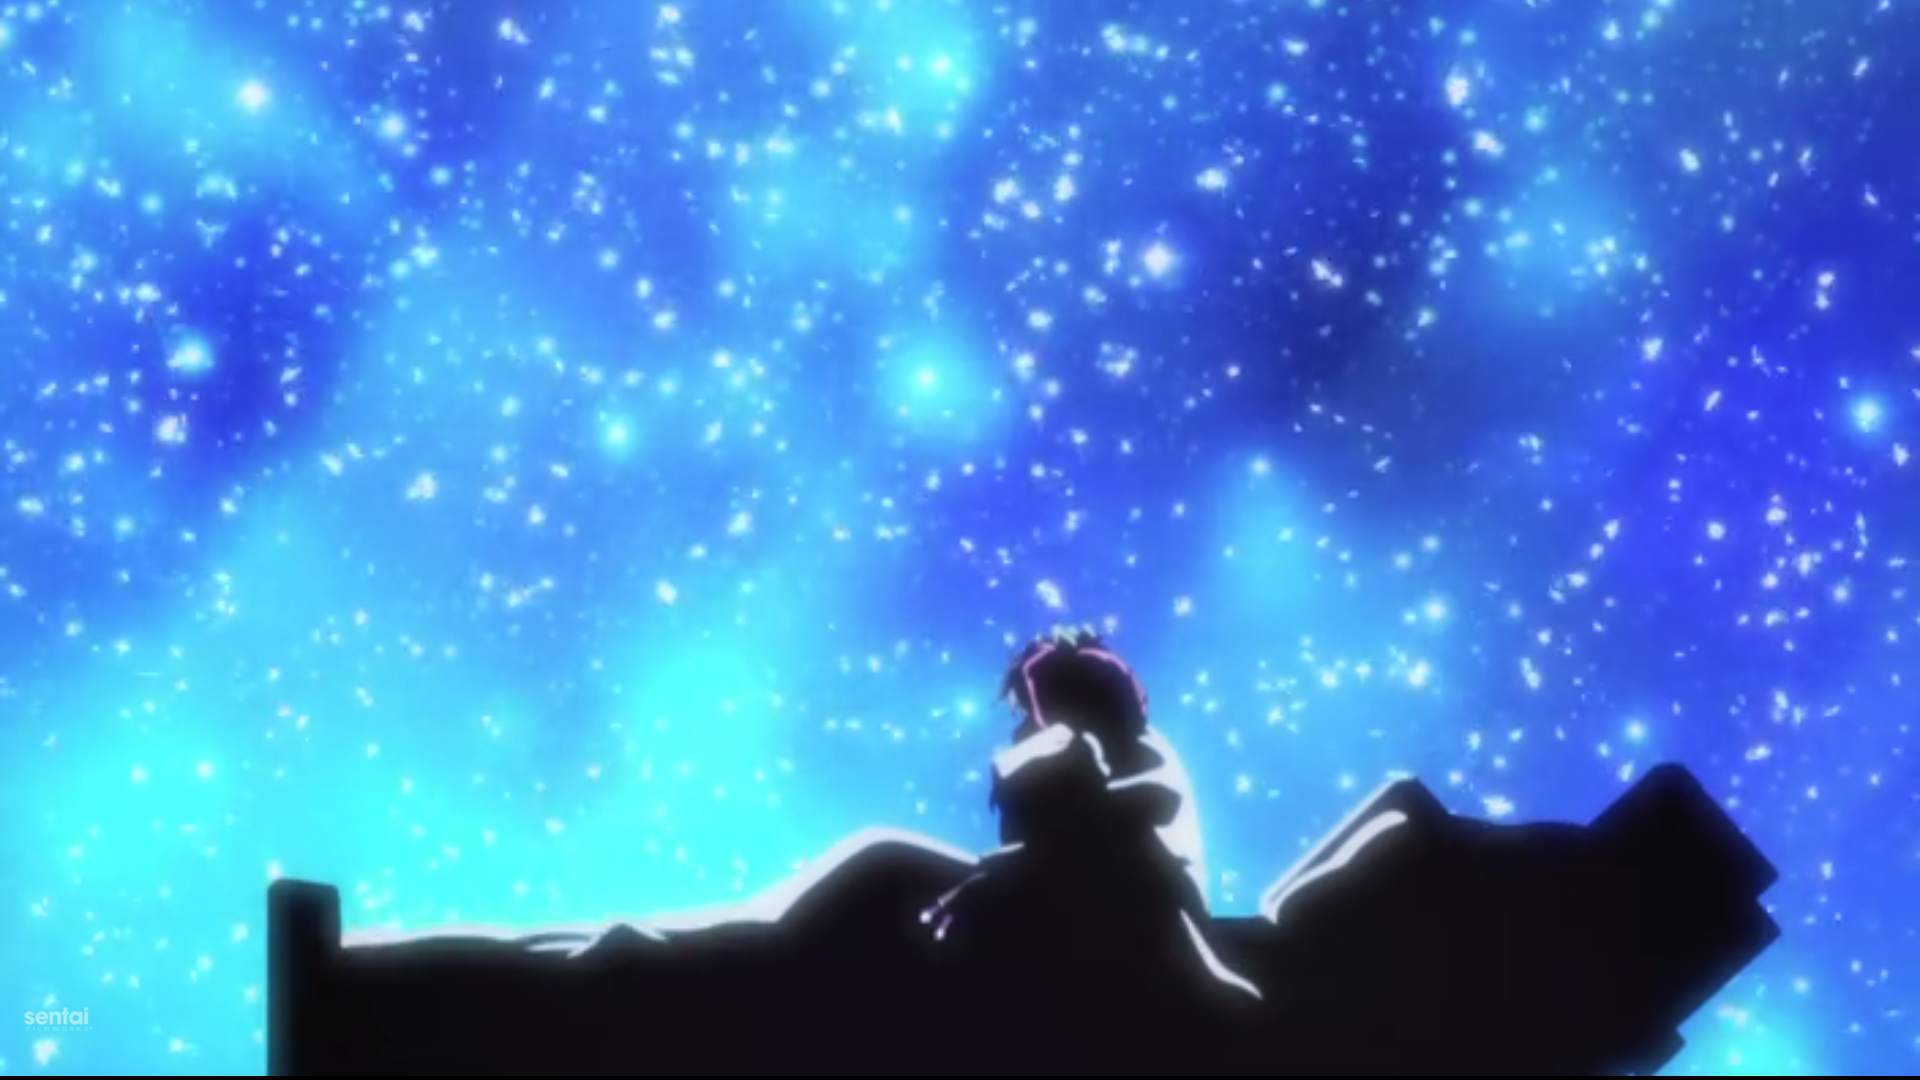 Rakudai Kishi no Cavalry - Stella x Ikki  Anime knight, Upcoming anime,  Anime romance